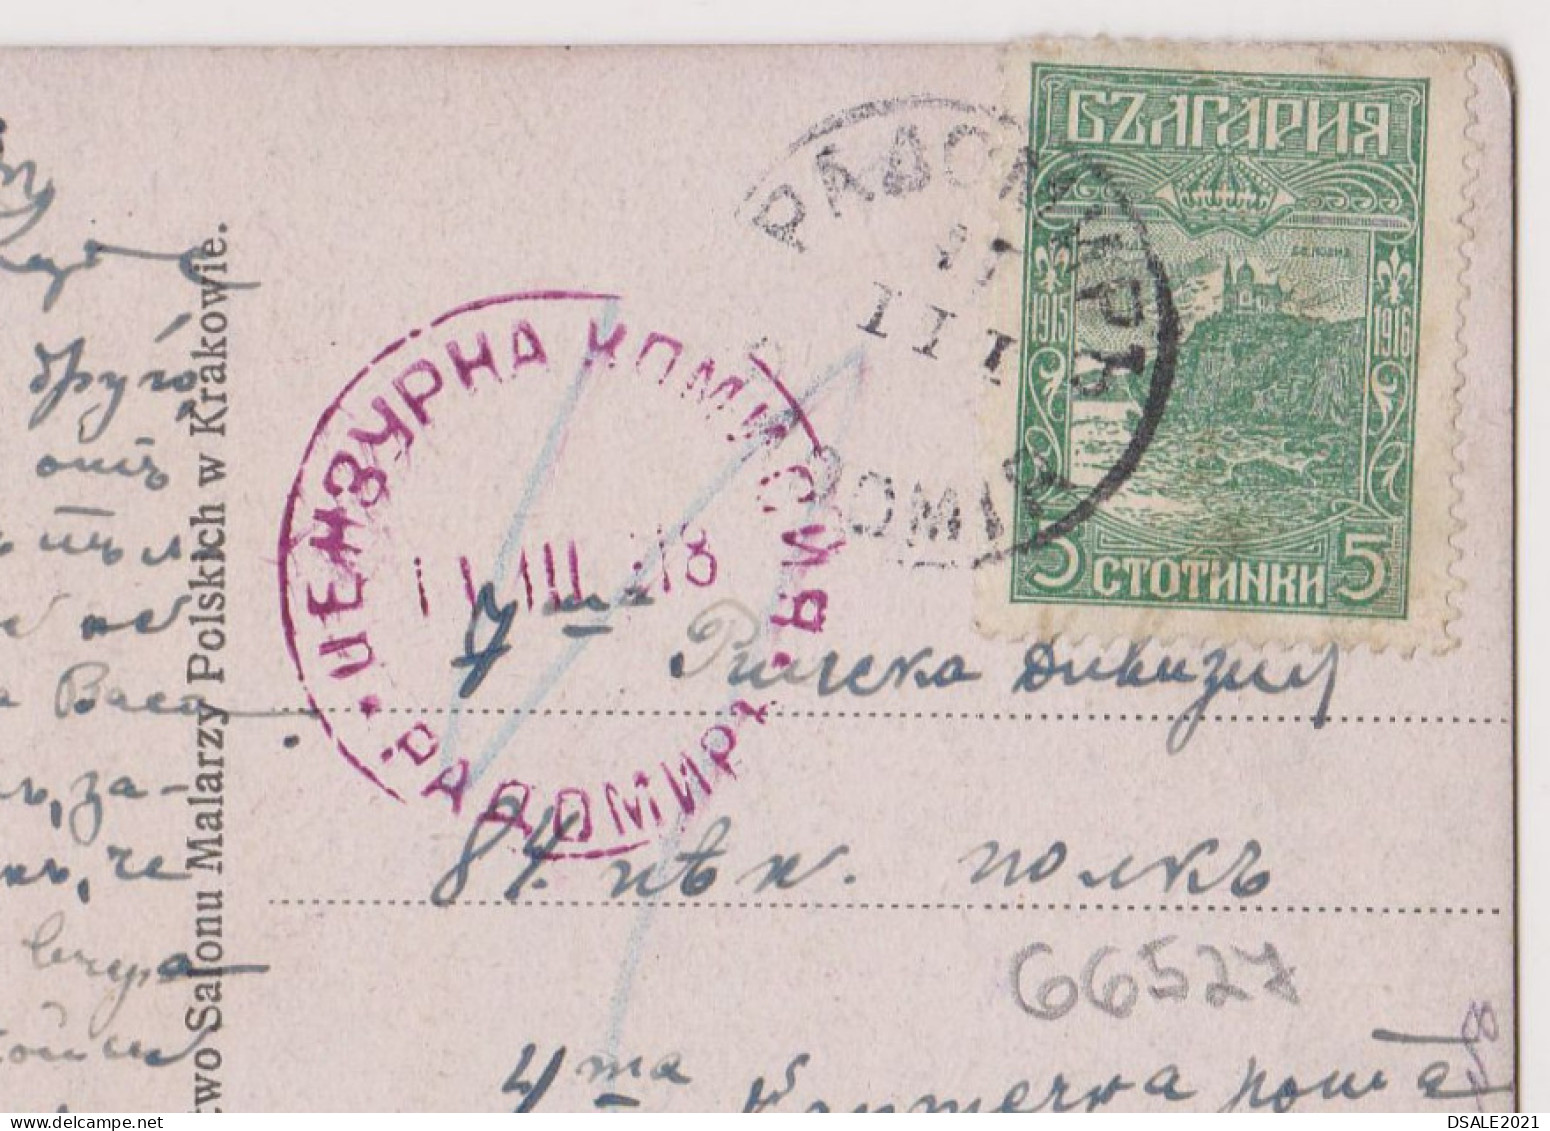 Bulgaria Bulgarien Ww1-1918 Civil Censored RADOMIR Cachet Artist Postcard By K. Szczawinski Boy W/Violin Postcard /66527 - Krieg